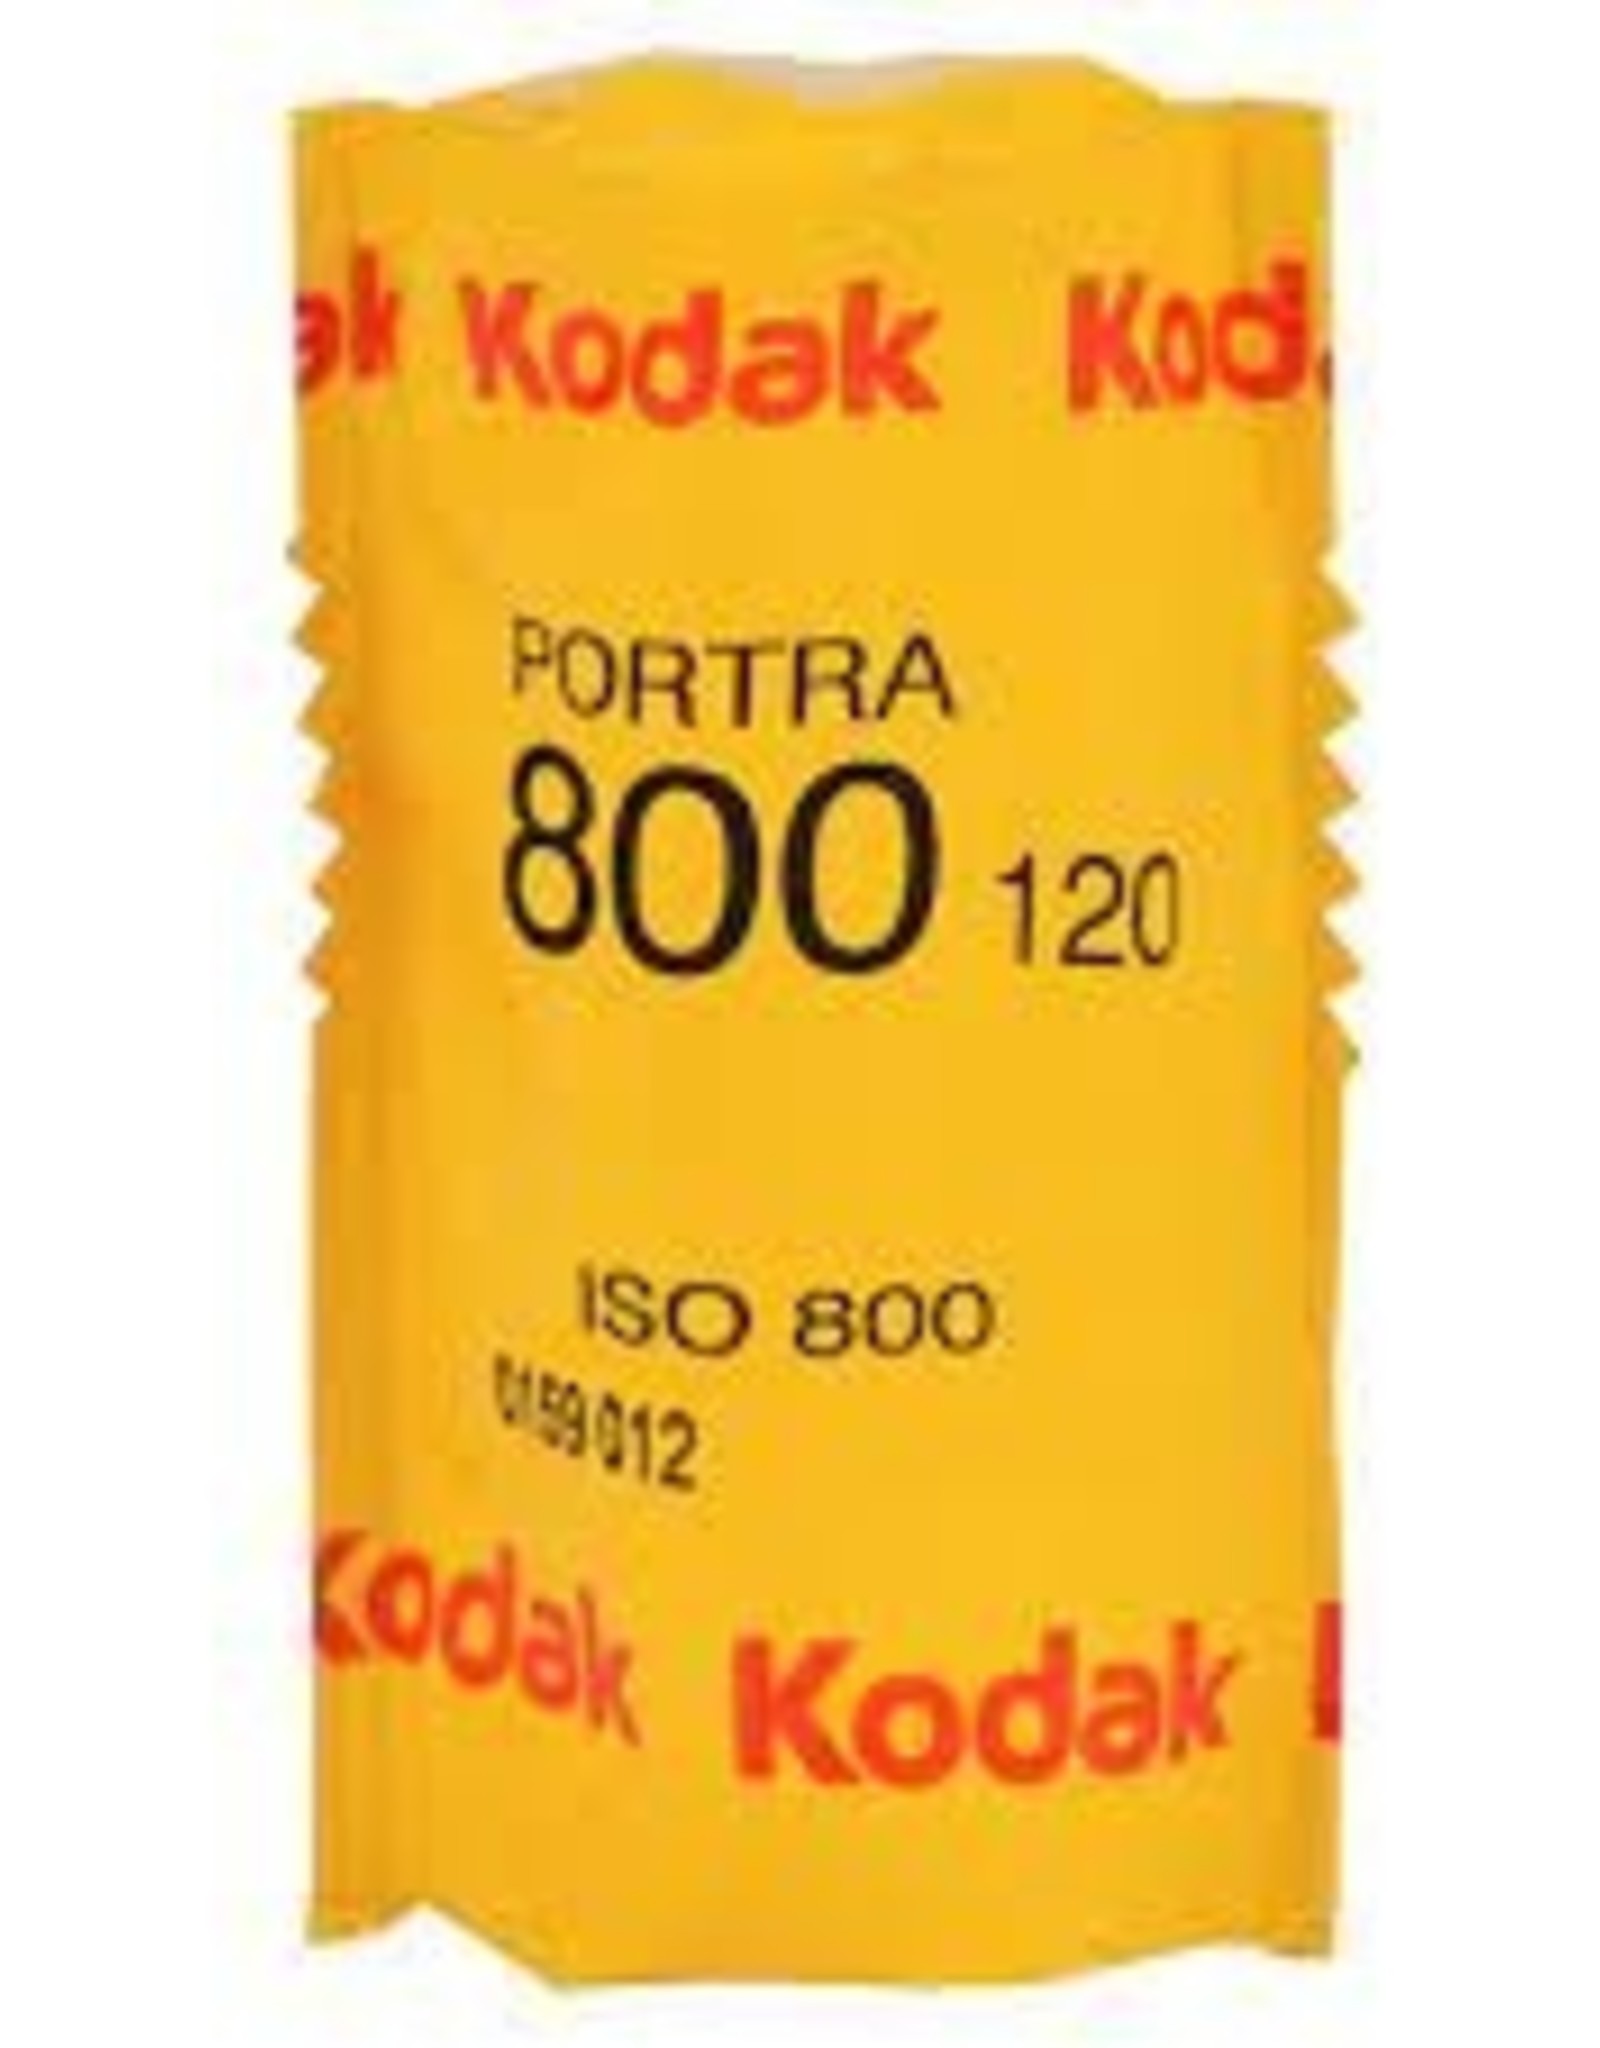 Kodak Kodak Portra 800 120 (5)